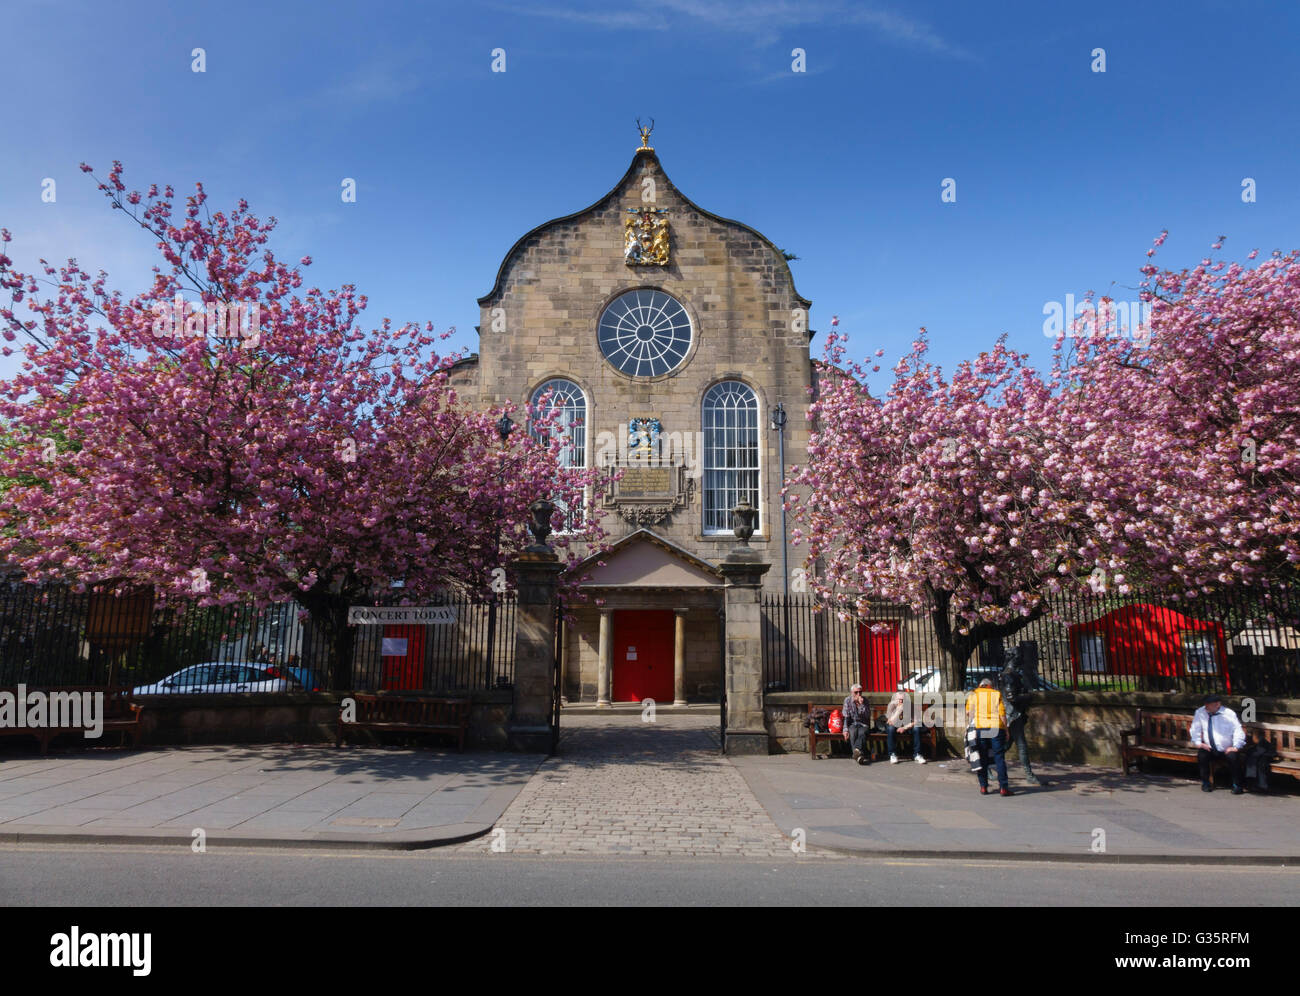 Moodie Kirk, Canongate, Edinburgh - concert venue. Cherry trees in spring. Stock Photo